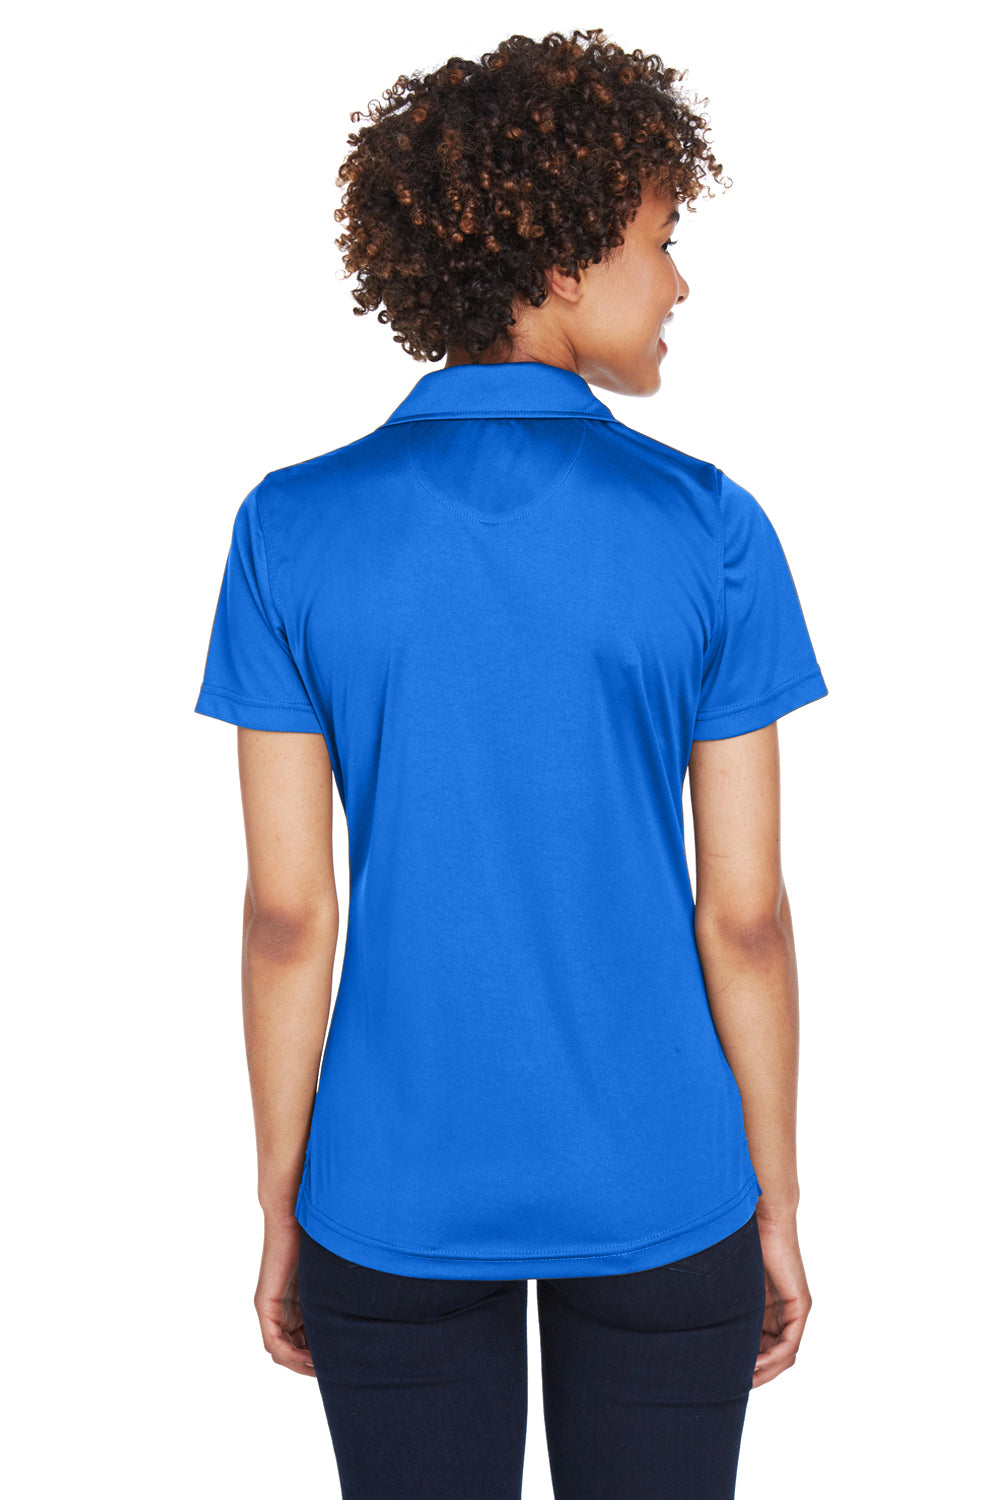 UltraClub 8425L Womens Cool & Dry Performance Moisture Wicking Short Sleeve Polo Shirt Royal Blue Back